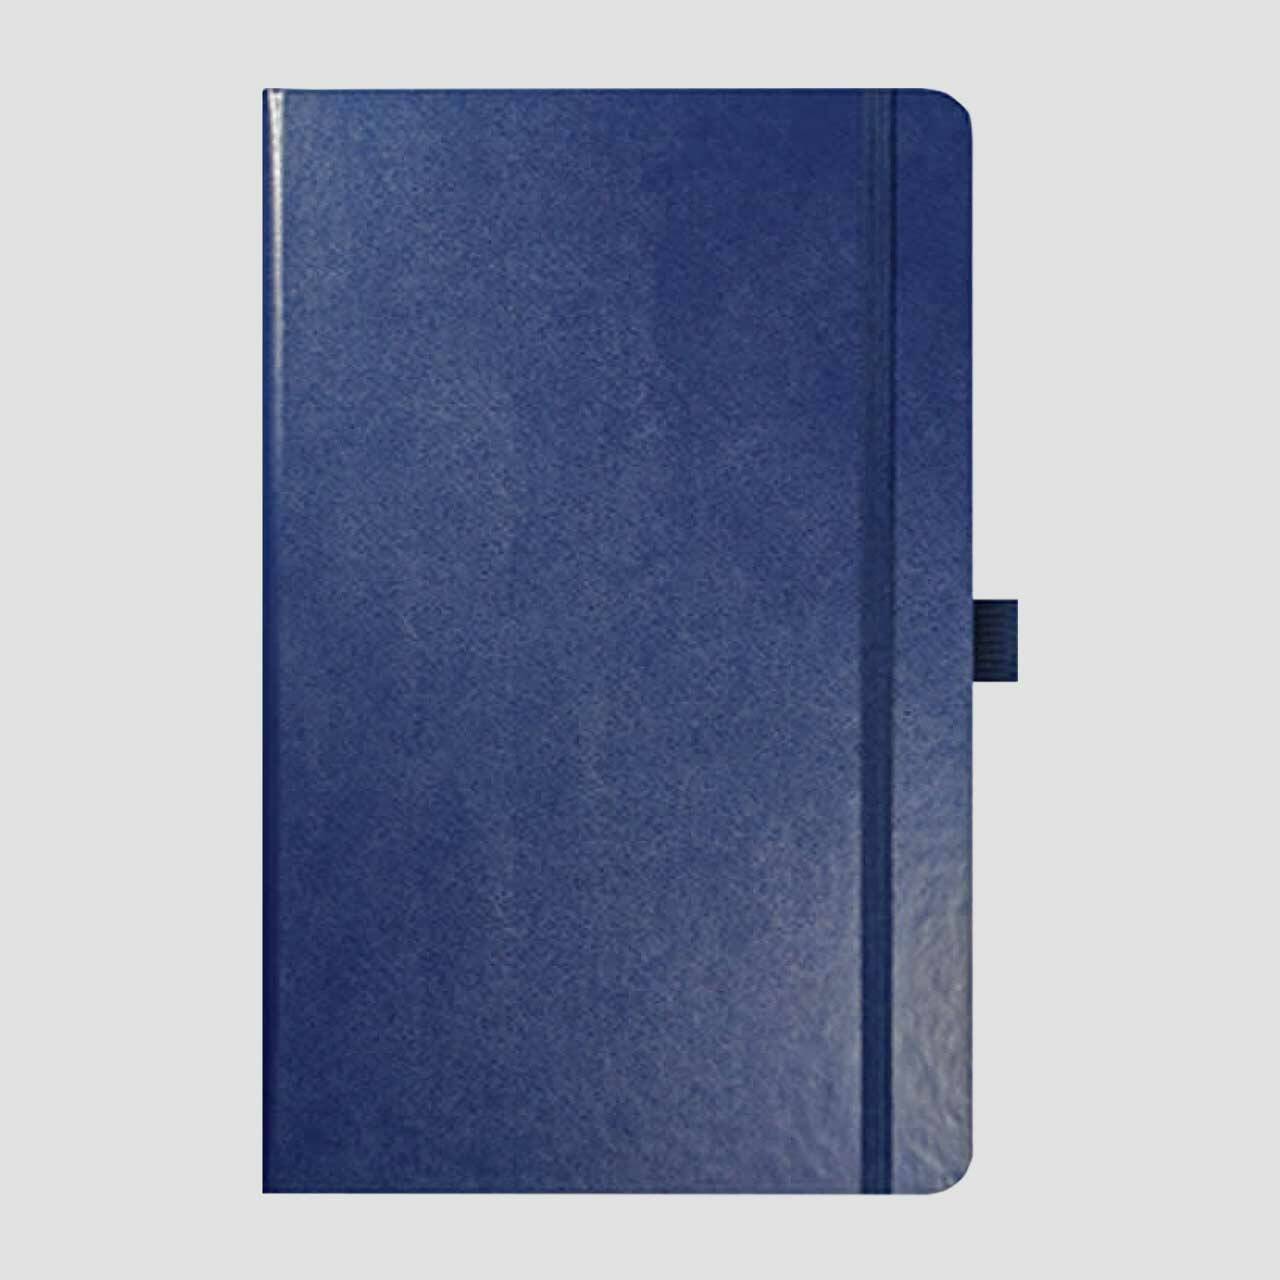 Castelli notitieboek zakelijk blauw